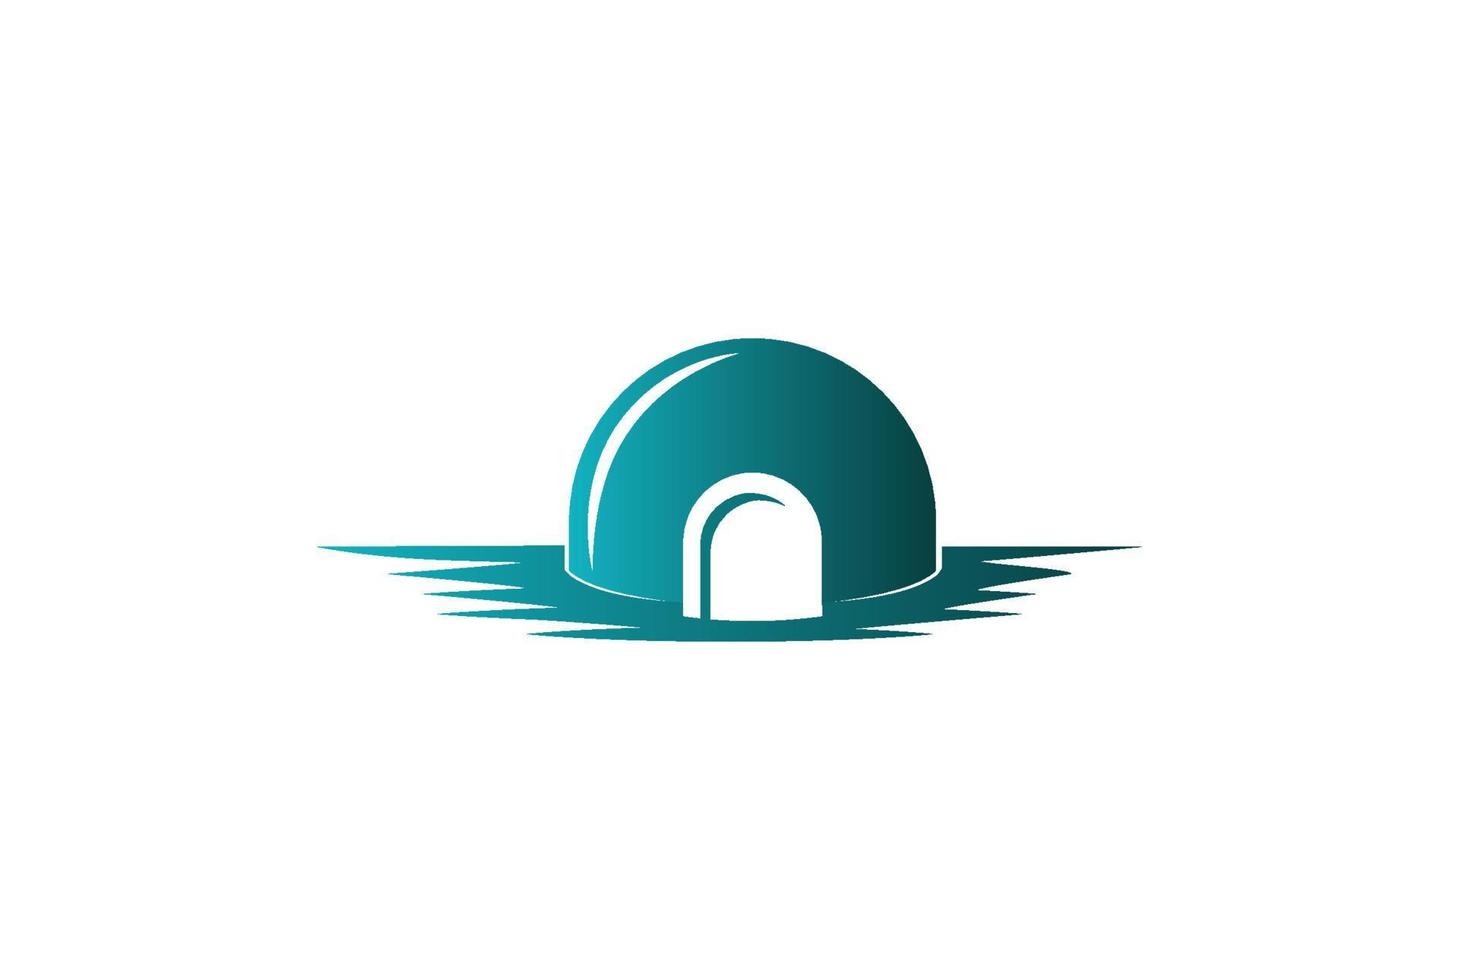 semplice minimalista ghiaccio inuit igloo house logo design vector